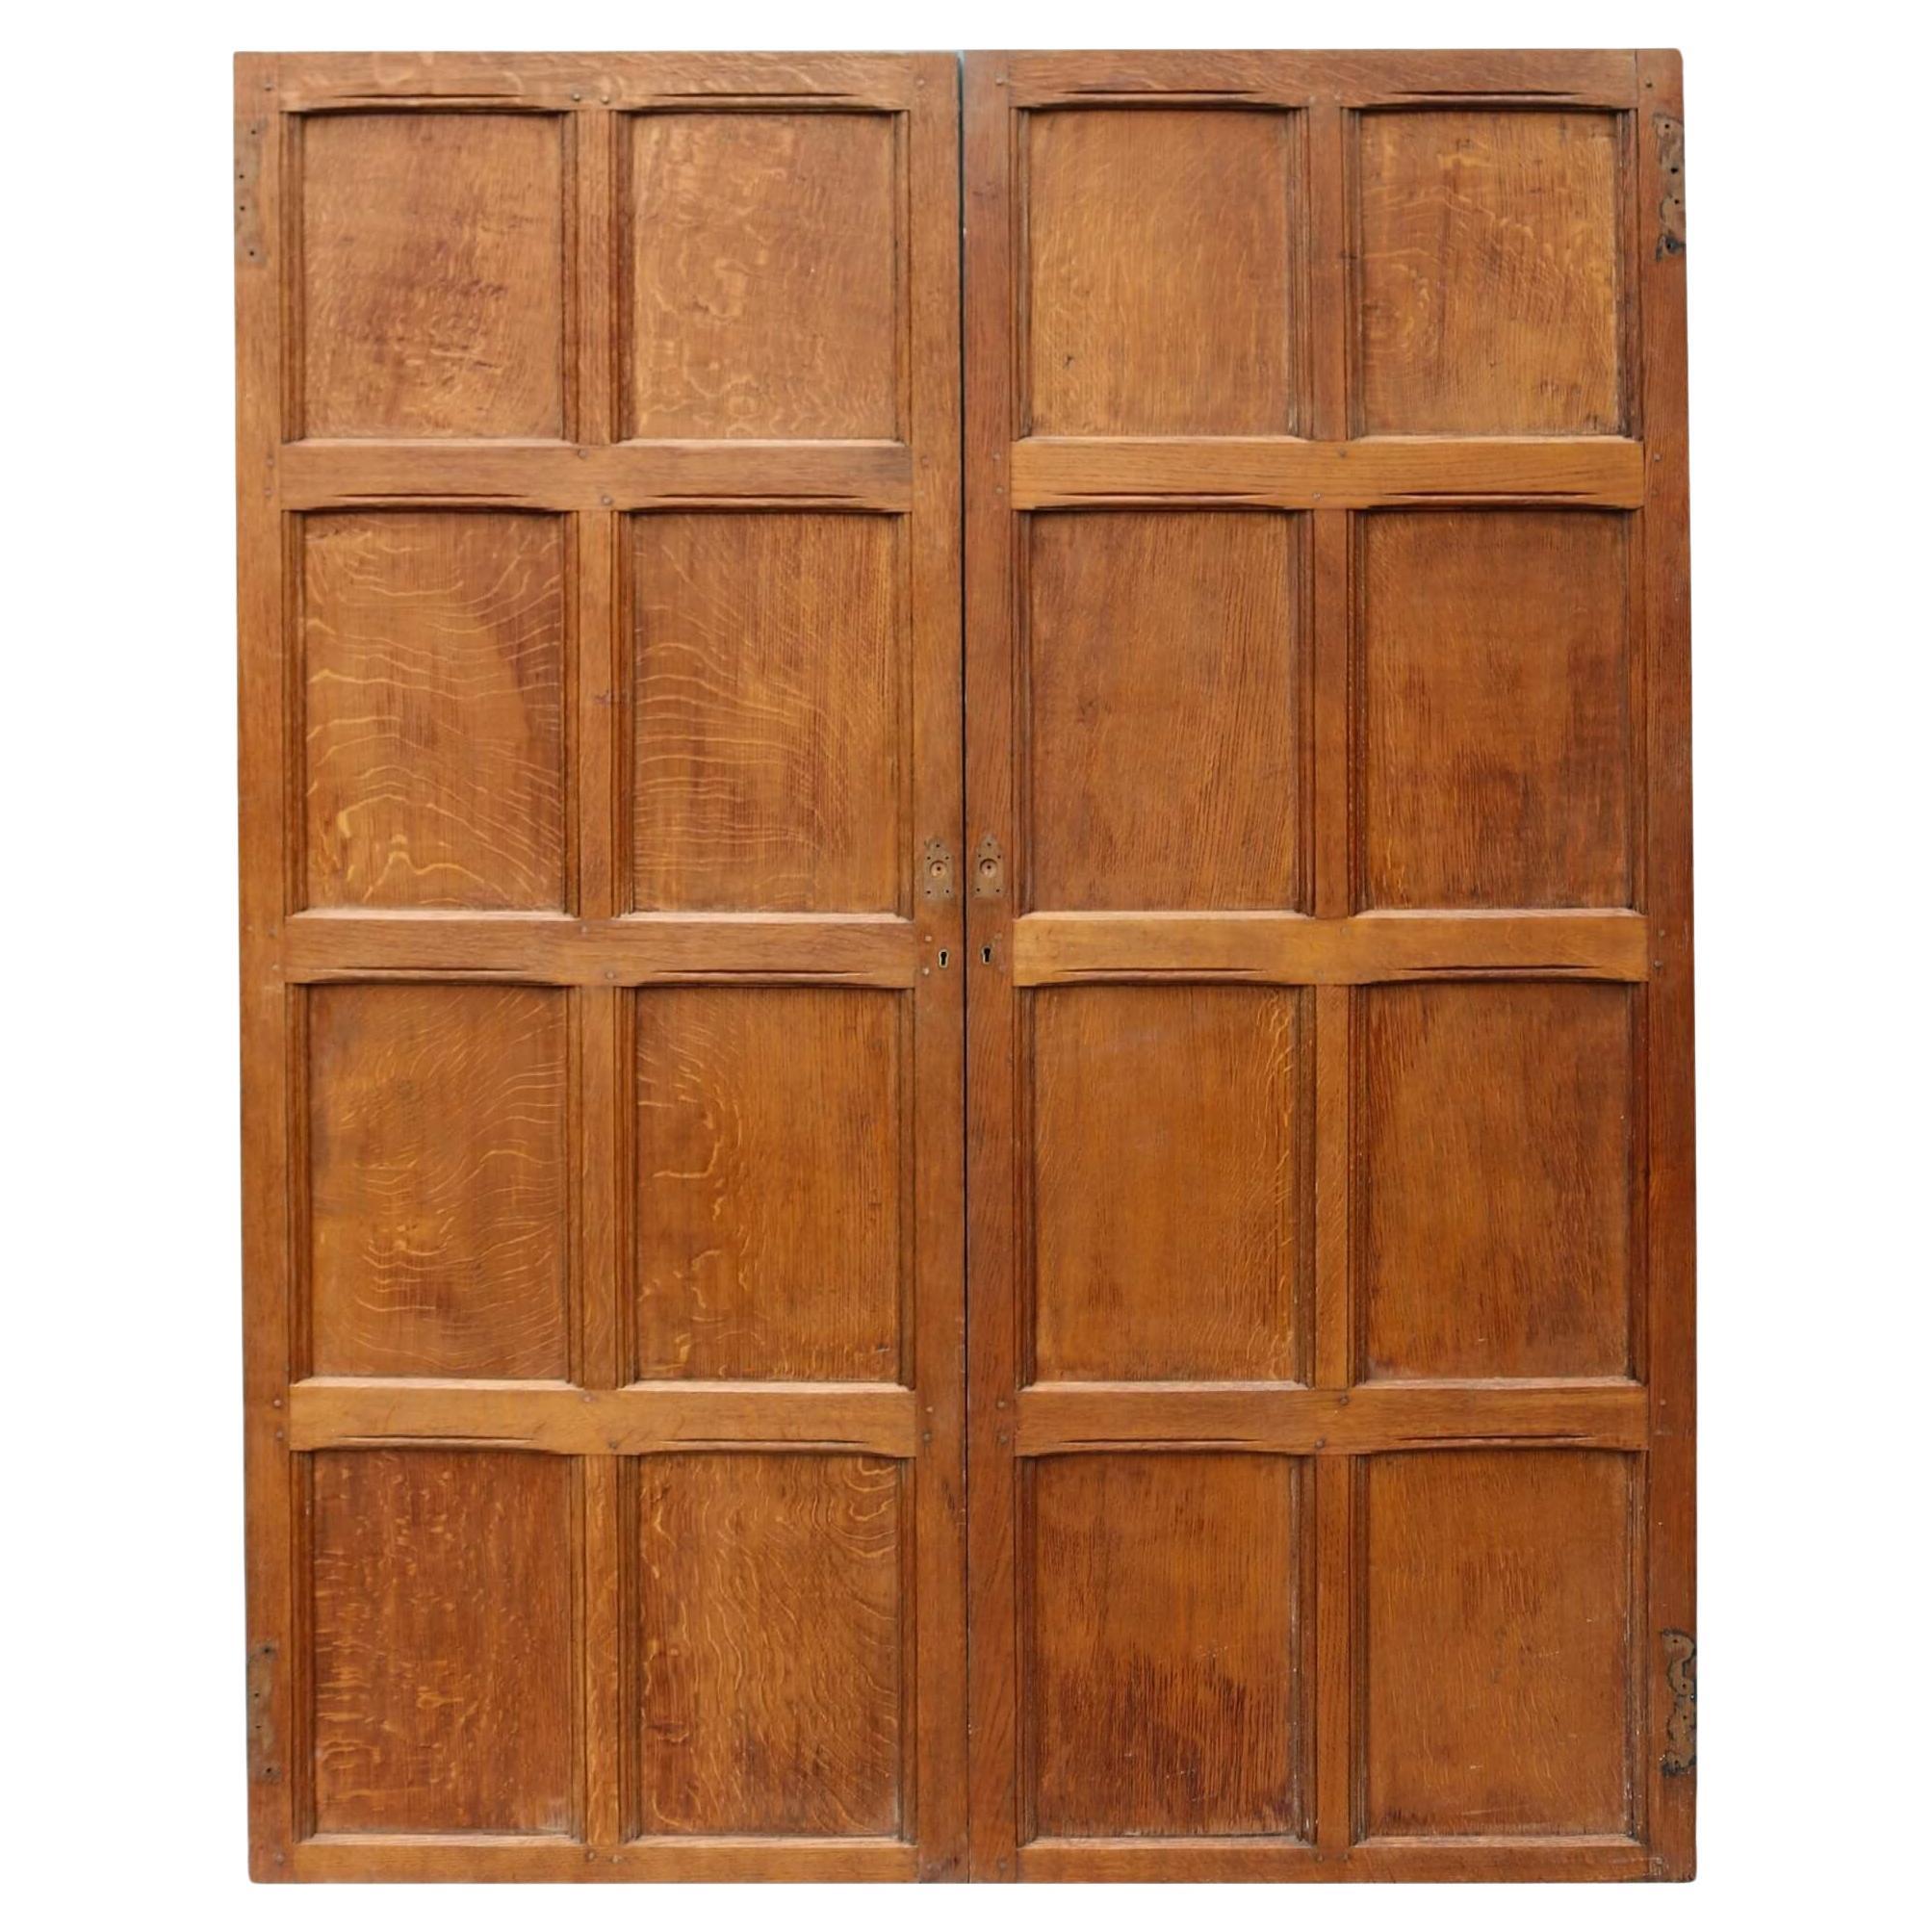 Set viktorianischer Doppeltüren aus Eichenholz im Tudor-Stil